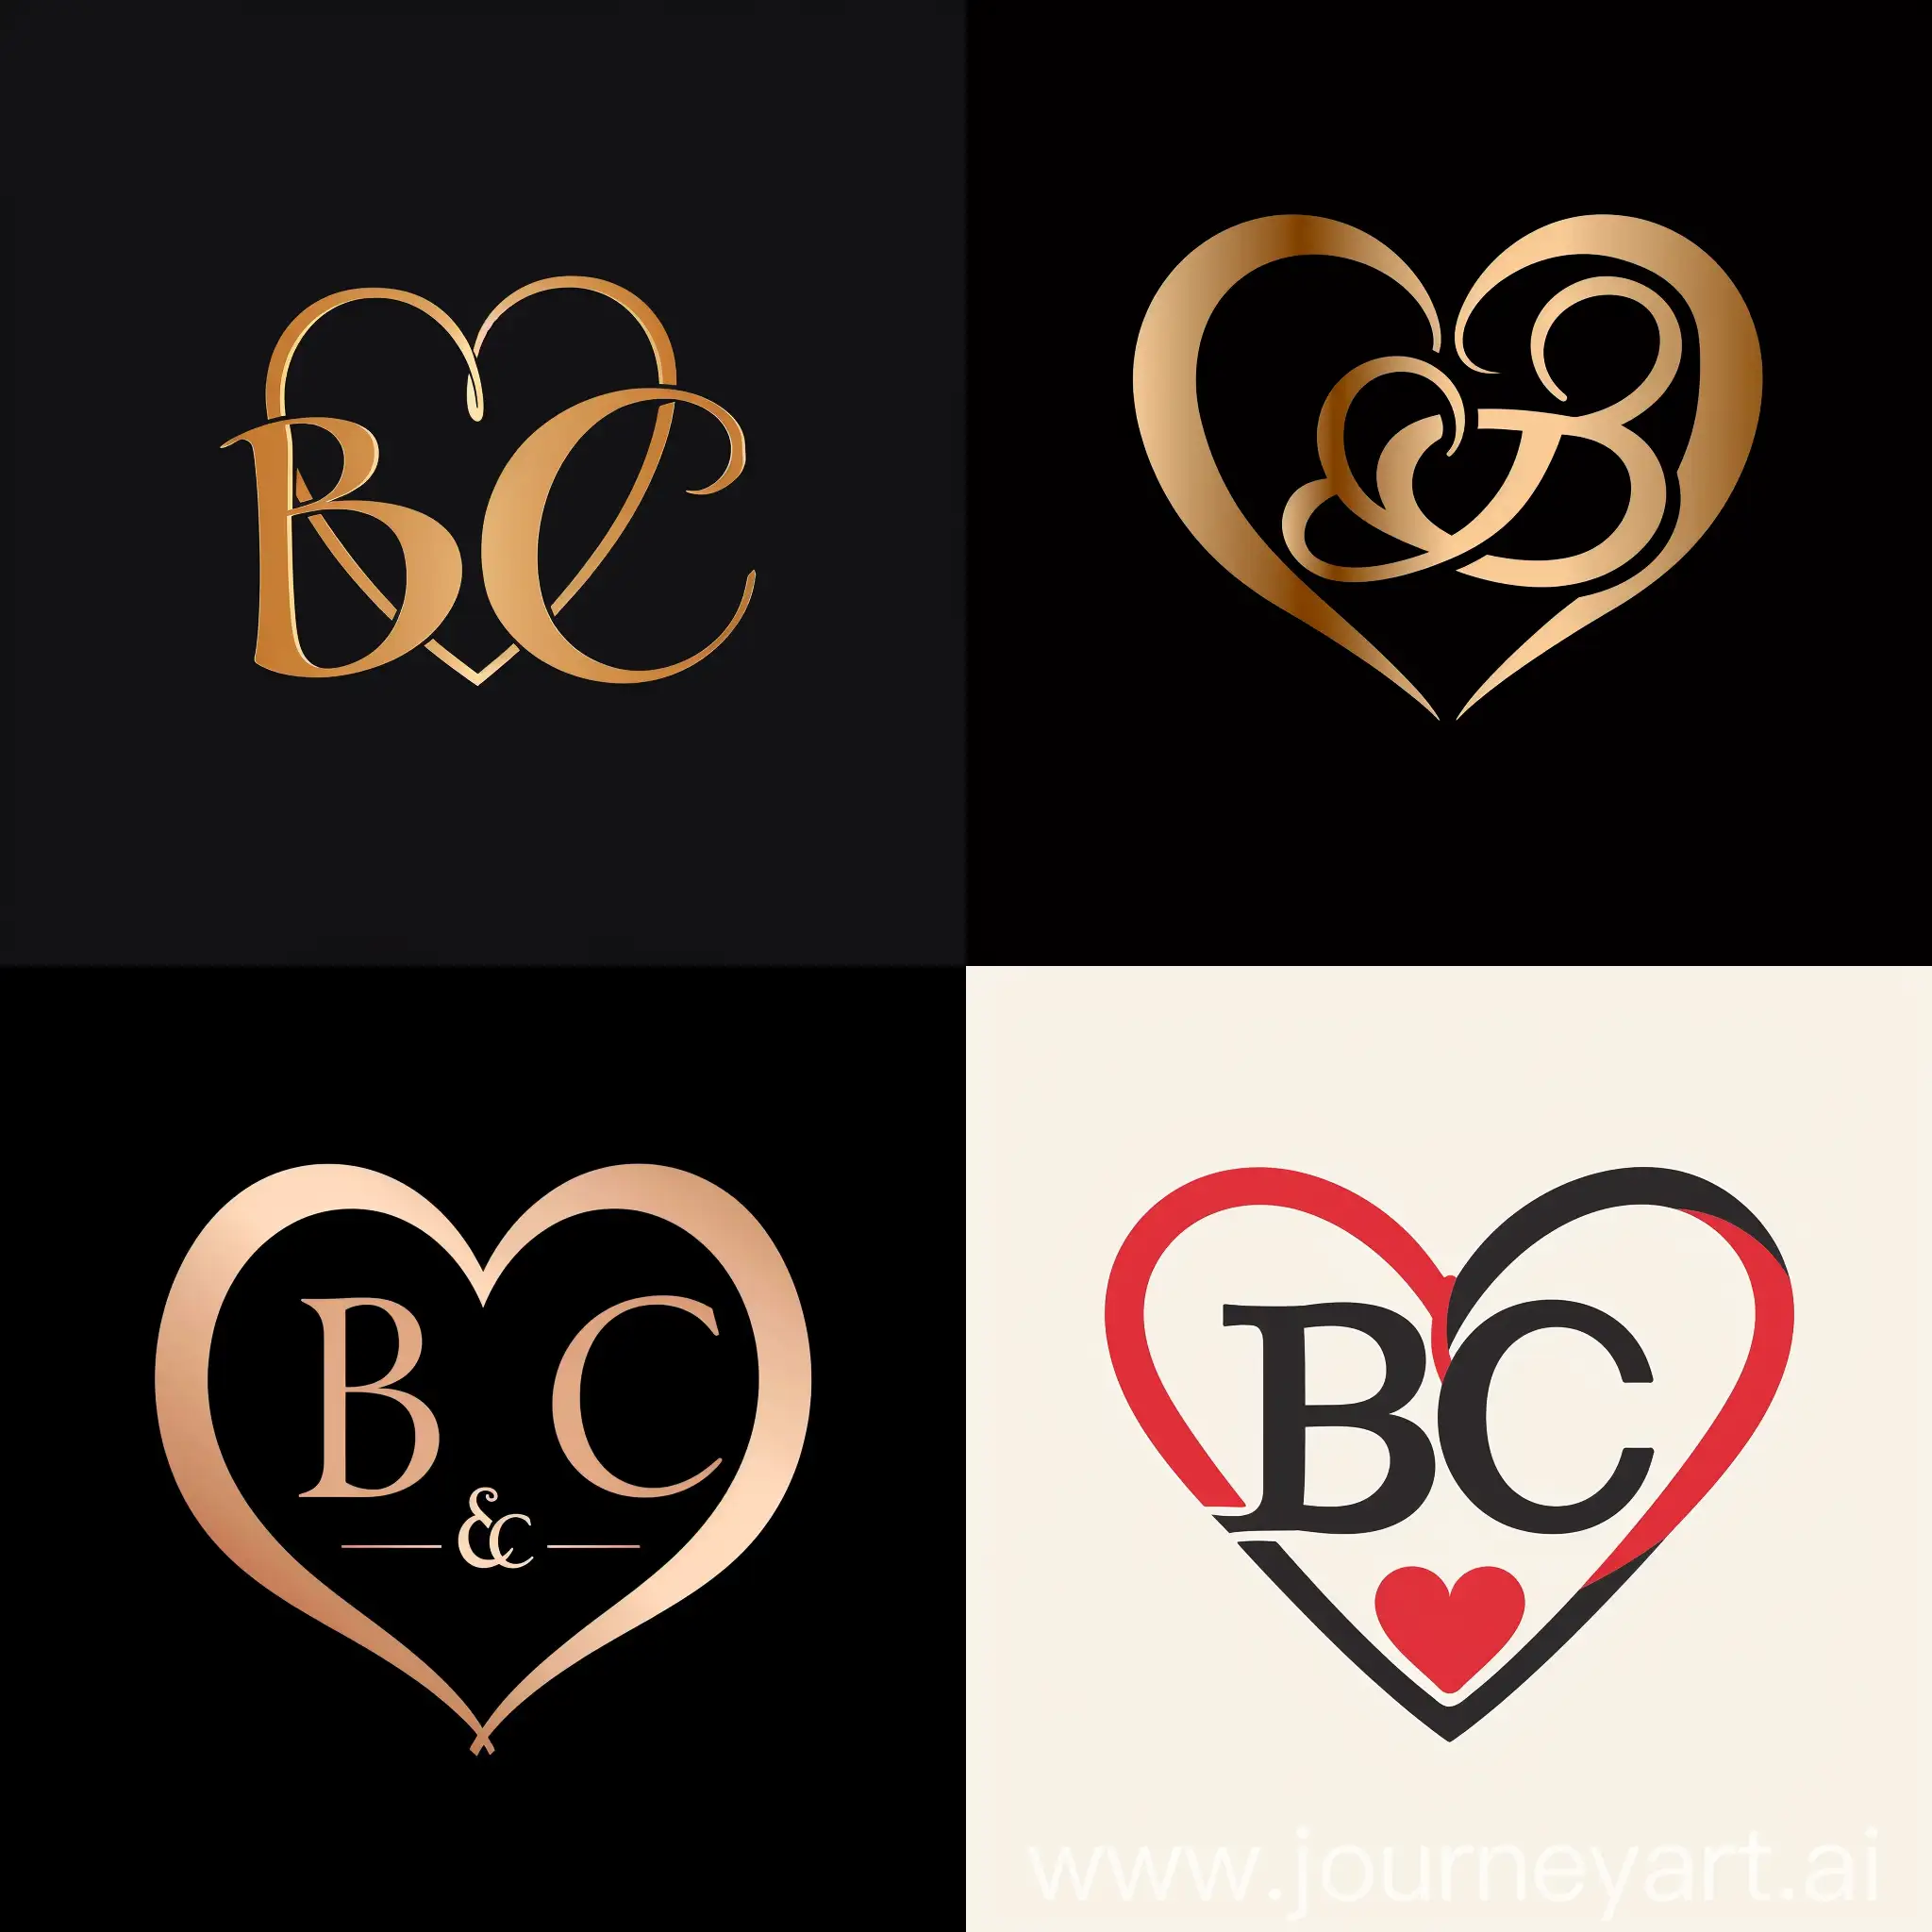 Elegant-Wedding-Logo-Design-with-Interlocked-B-and-C-and-Heart-Symbol